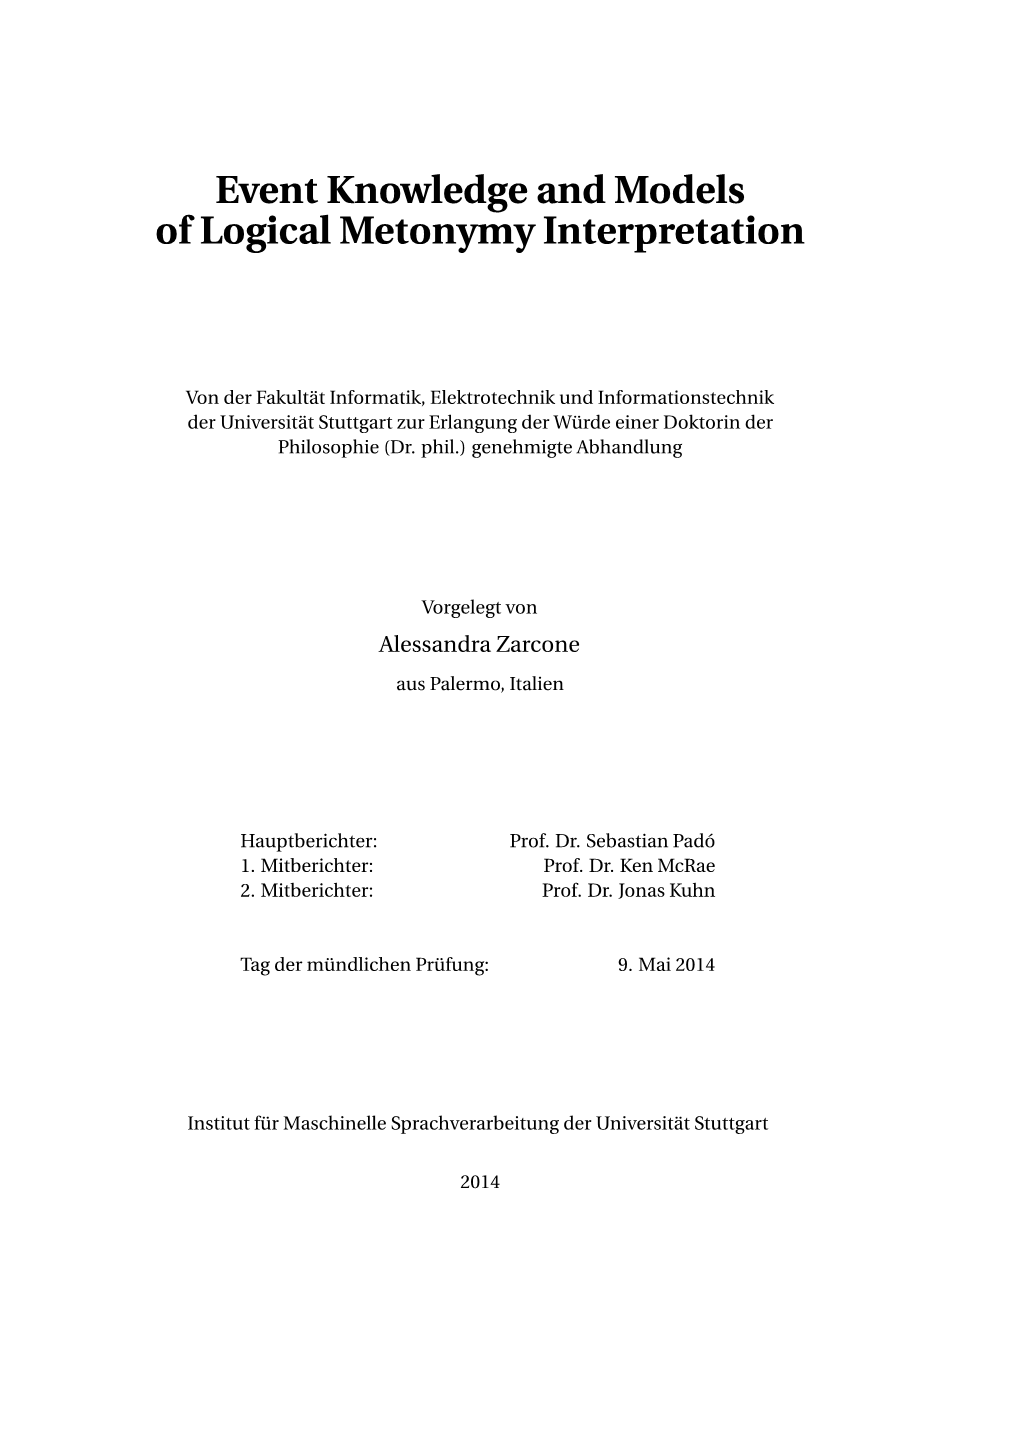 Event Knowledge and Models of Logical Metonymy Interpretation